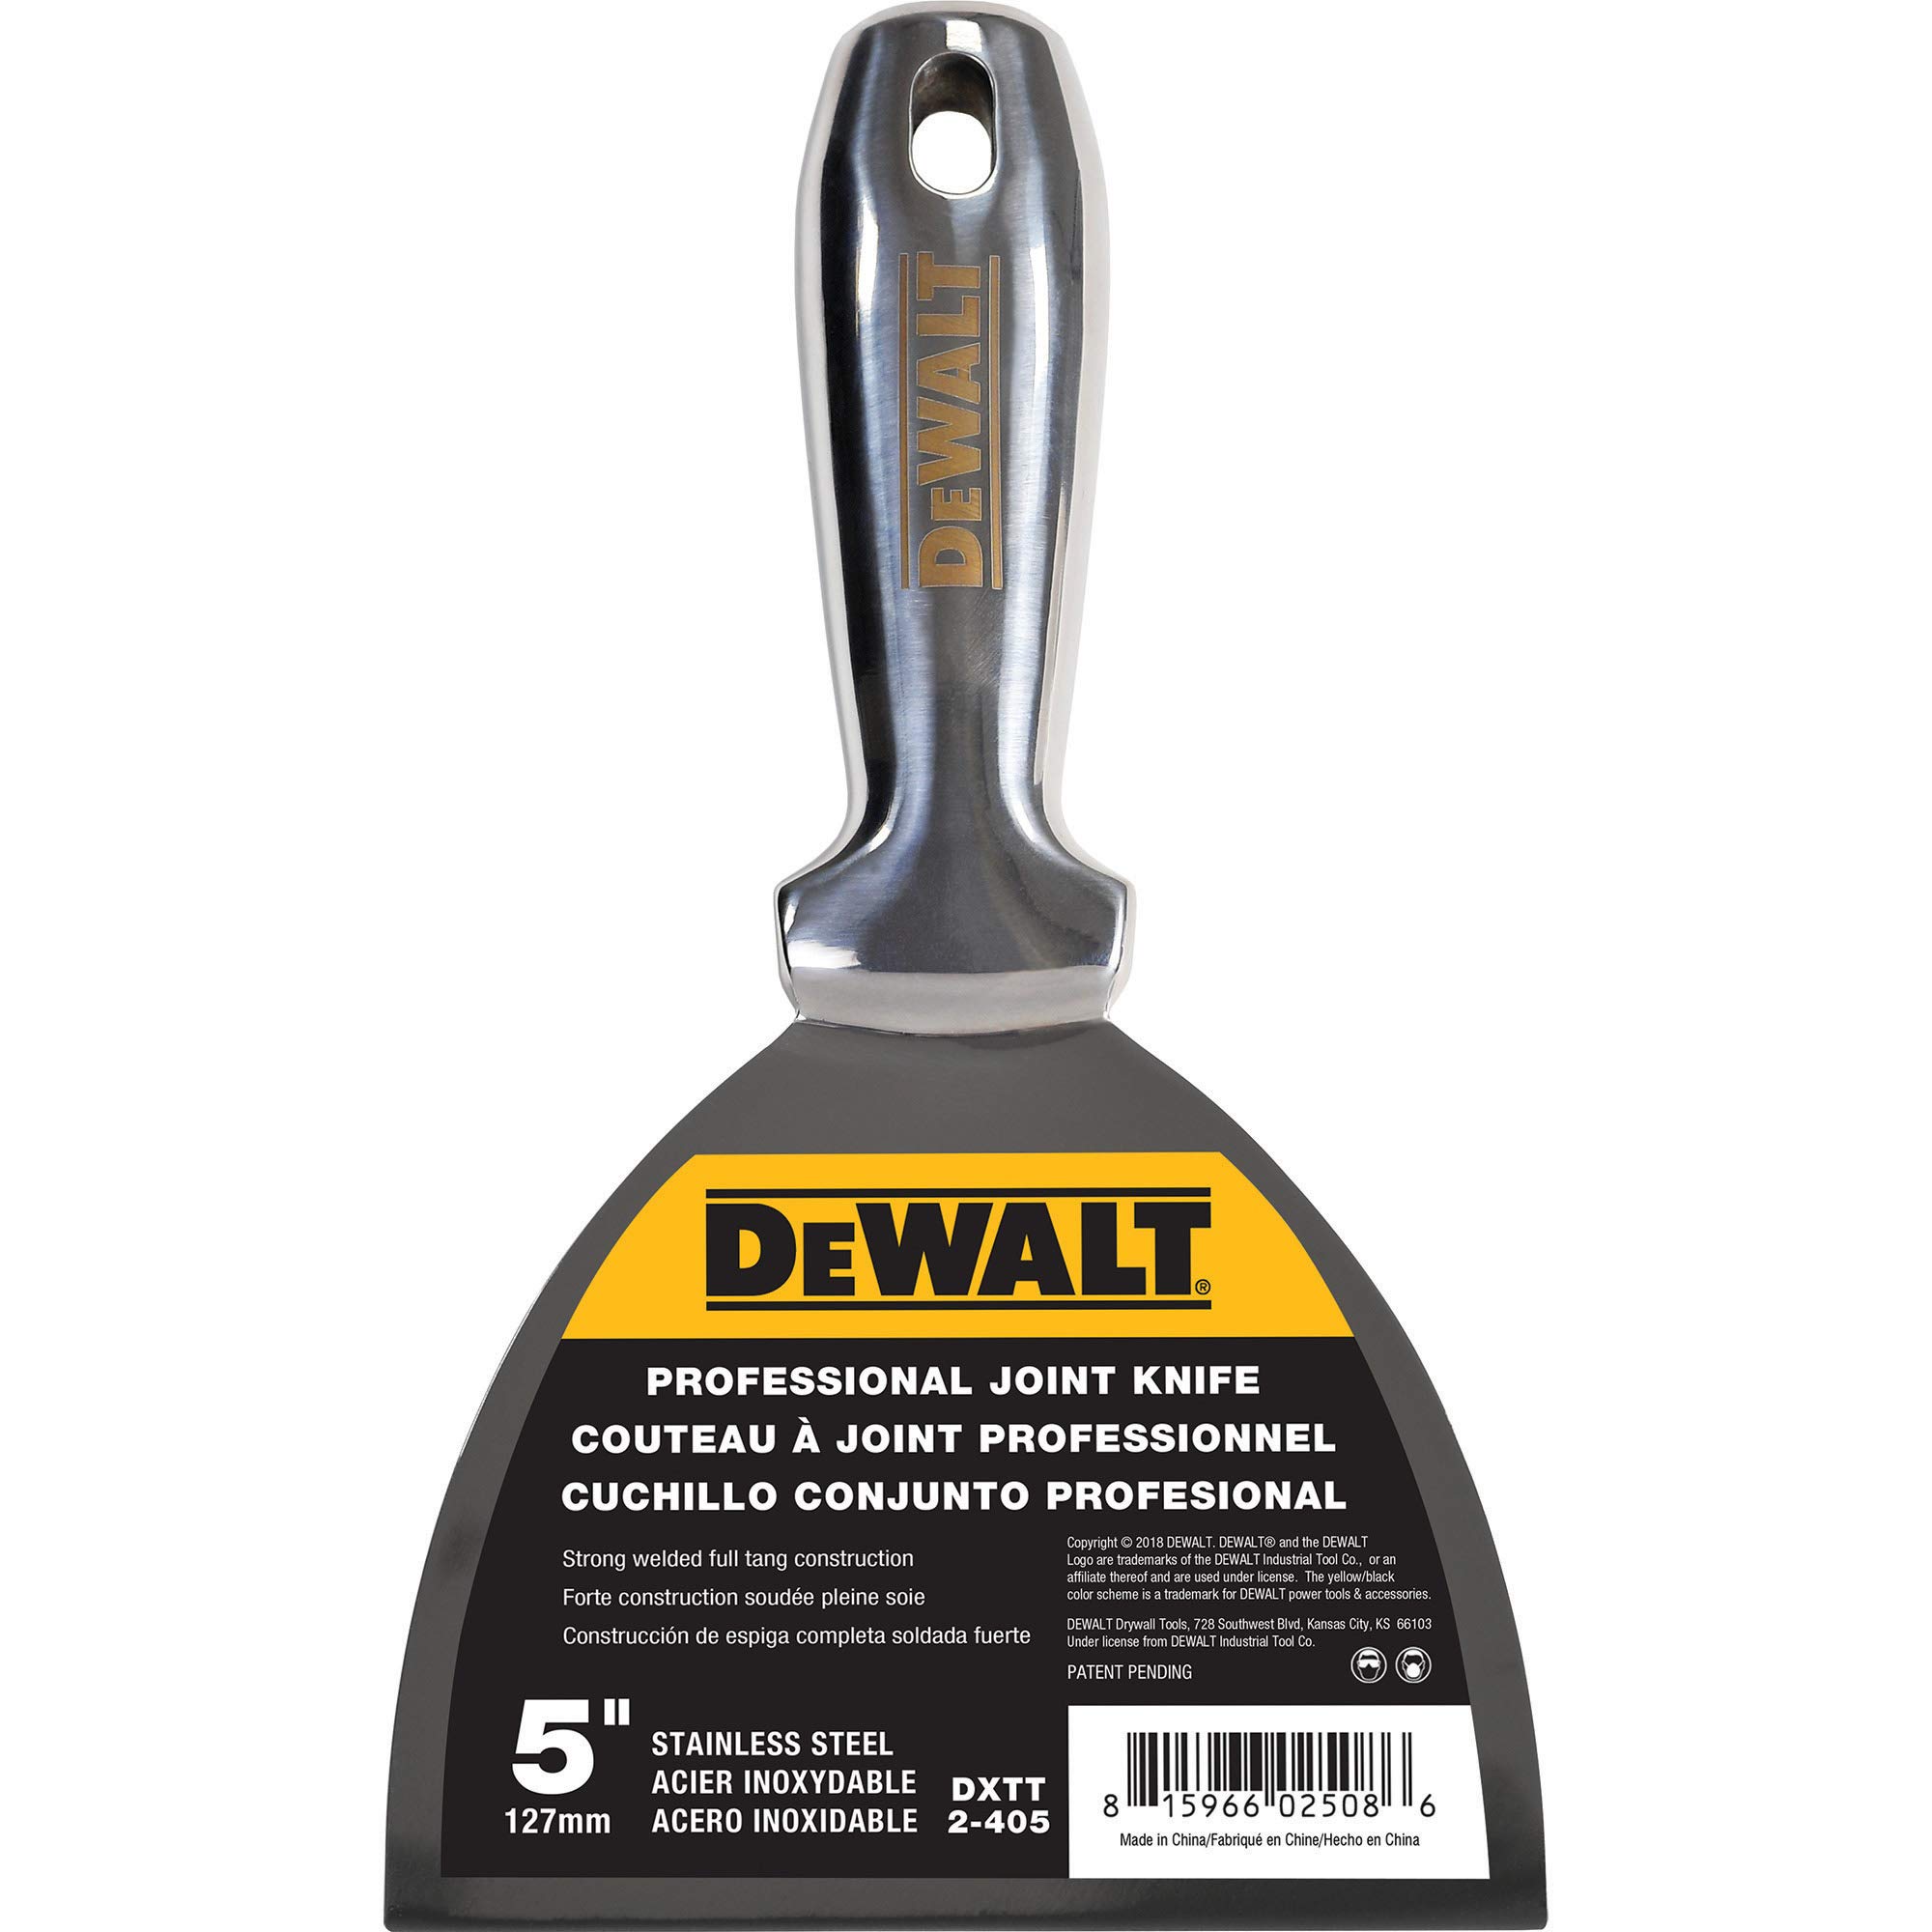 DeWALT 5" Welded Stainless Steel Metal Professional Joint Putty Blade Knife 2-405 $8.99 @ Amazon